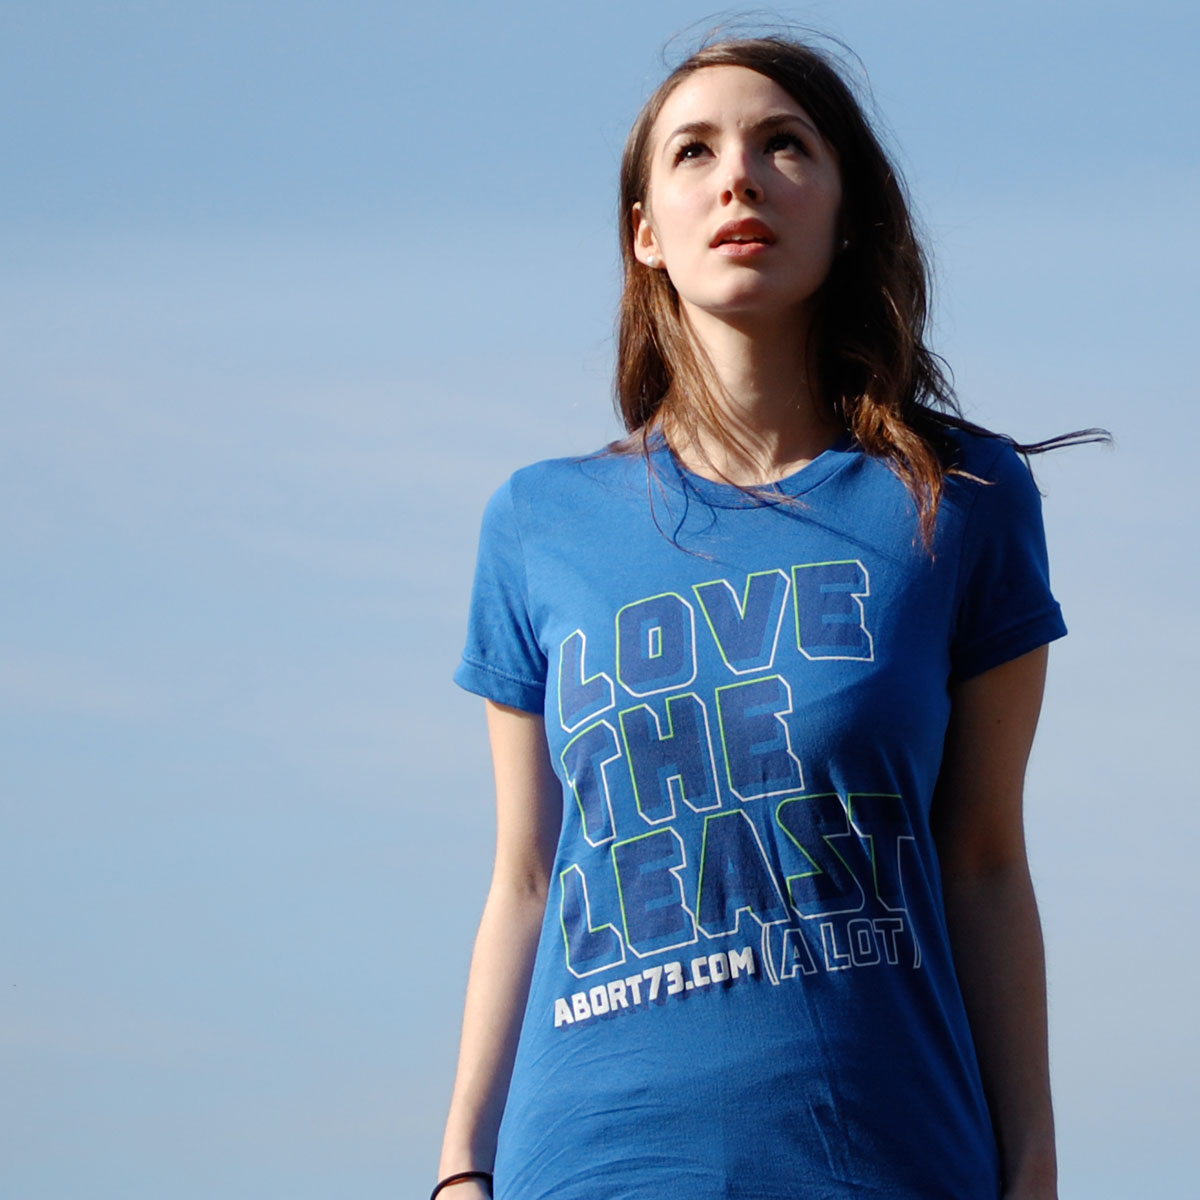 Love the Least (A Lot) (Abort73 Girls T-shirt)